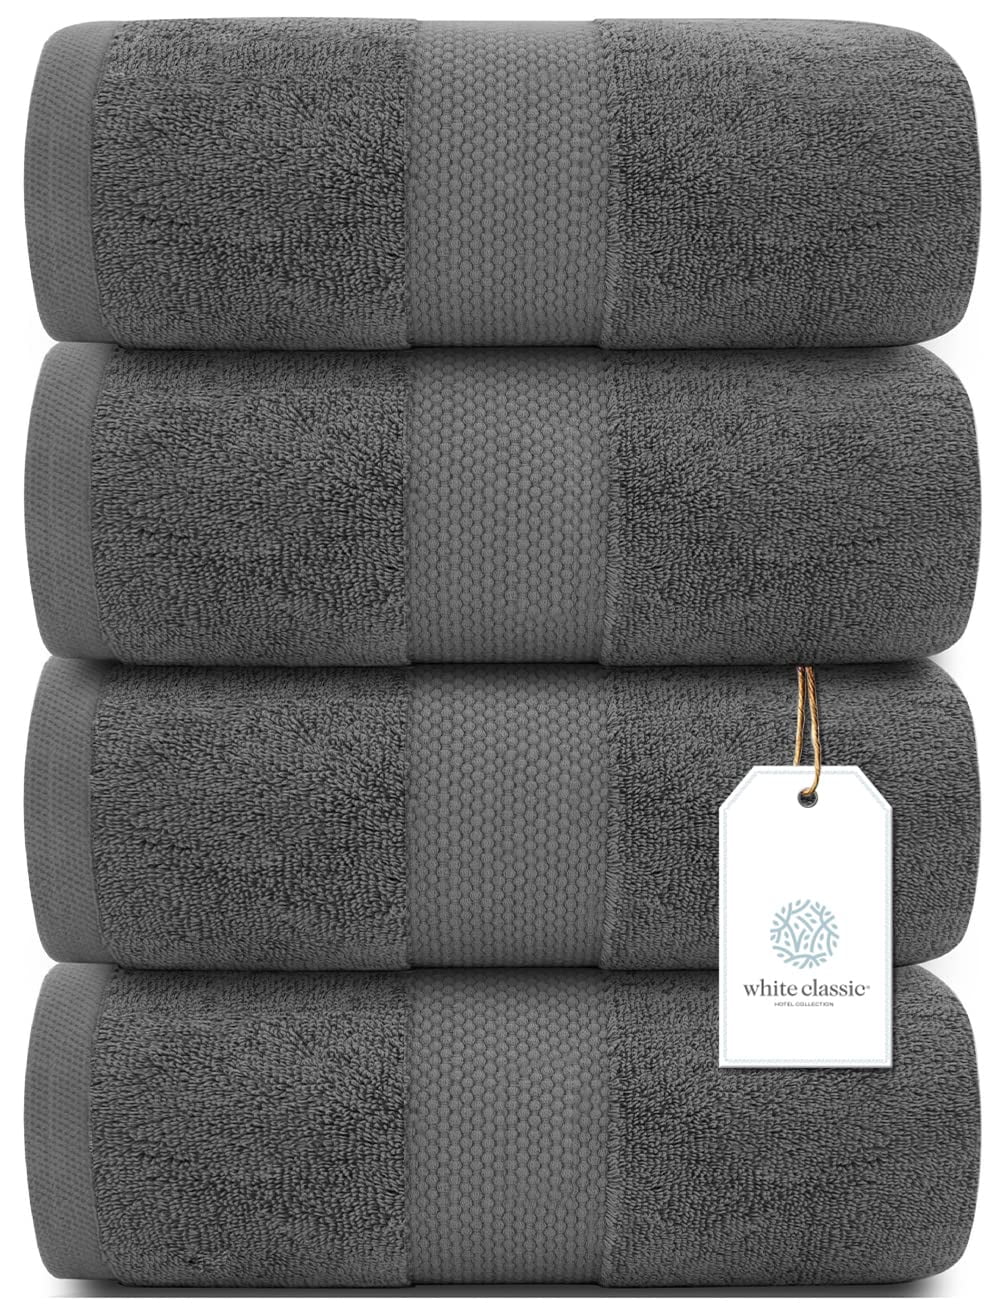 Hotel Collection Turkish 30 x 56 Bath Towel Atomic New